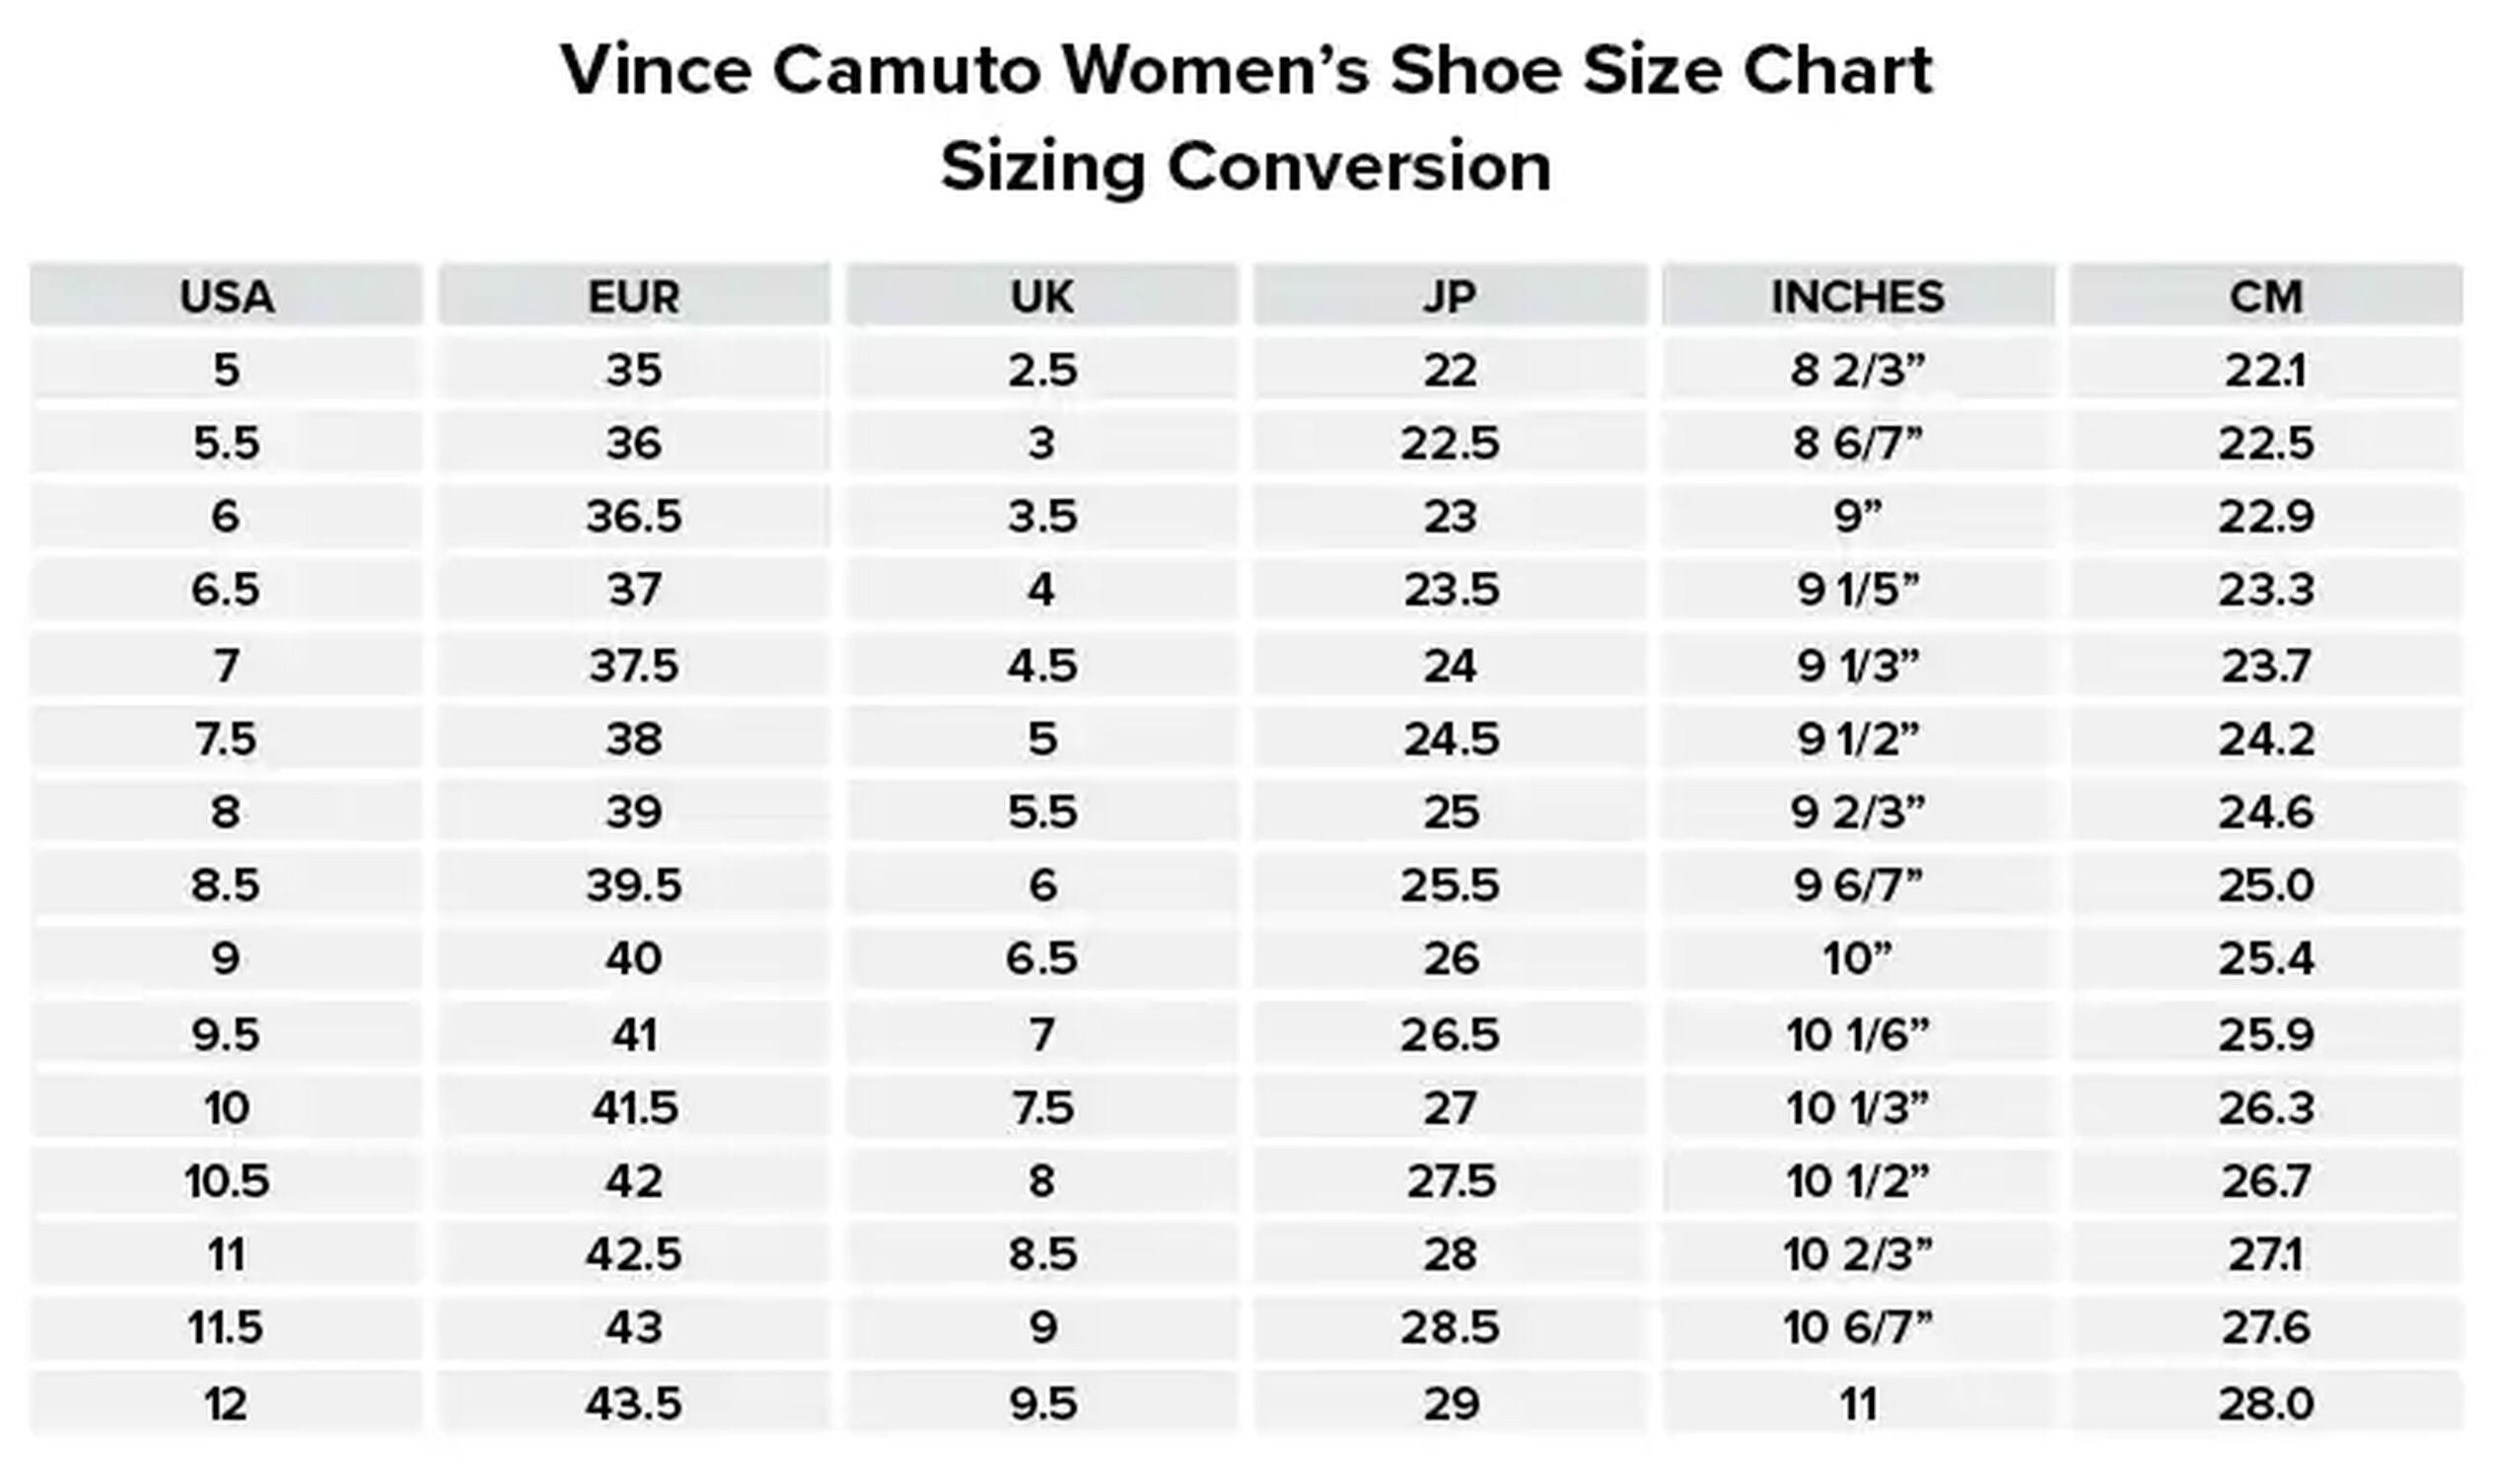 Vince Camuto Poula Strappy Platform Wedge Sandals - Indigo Wash Golden Walnut - Size 5.5M